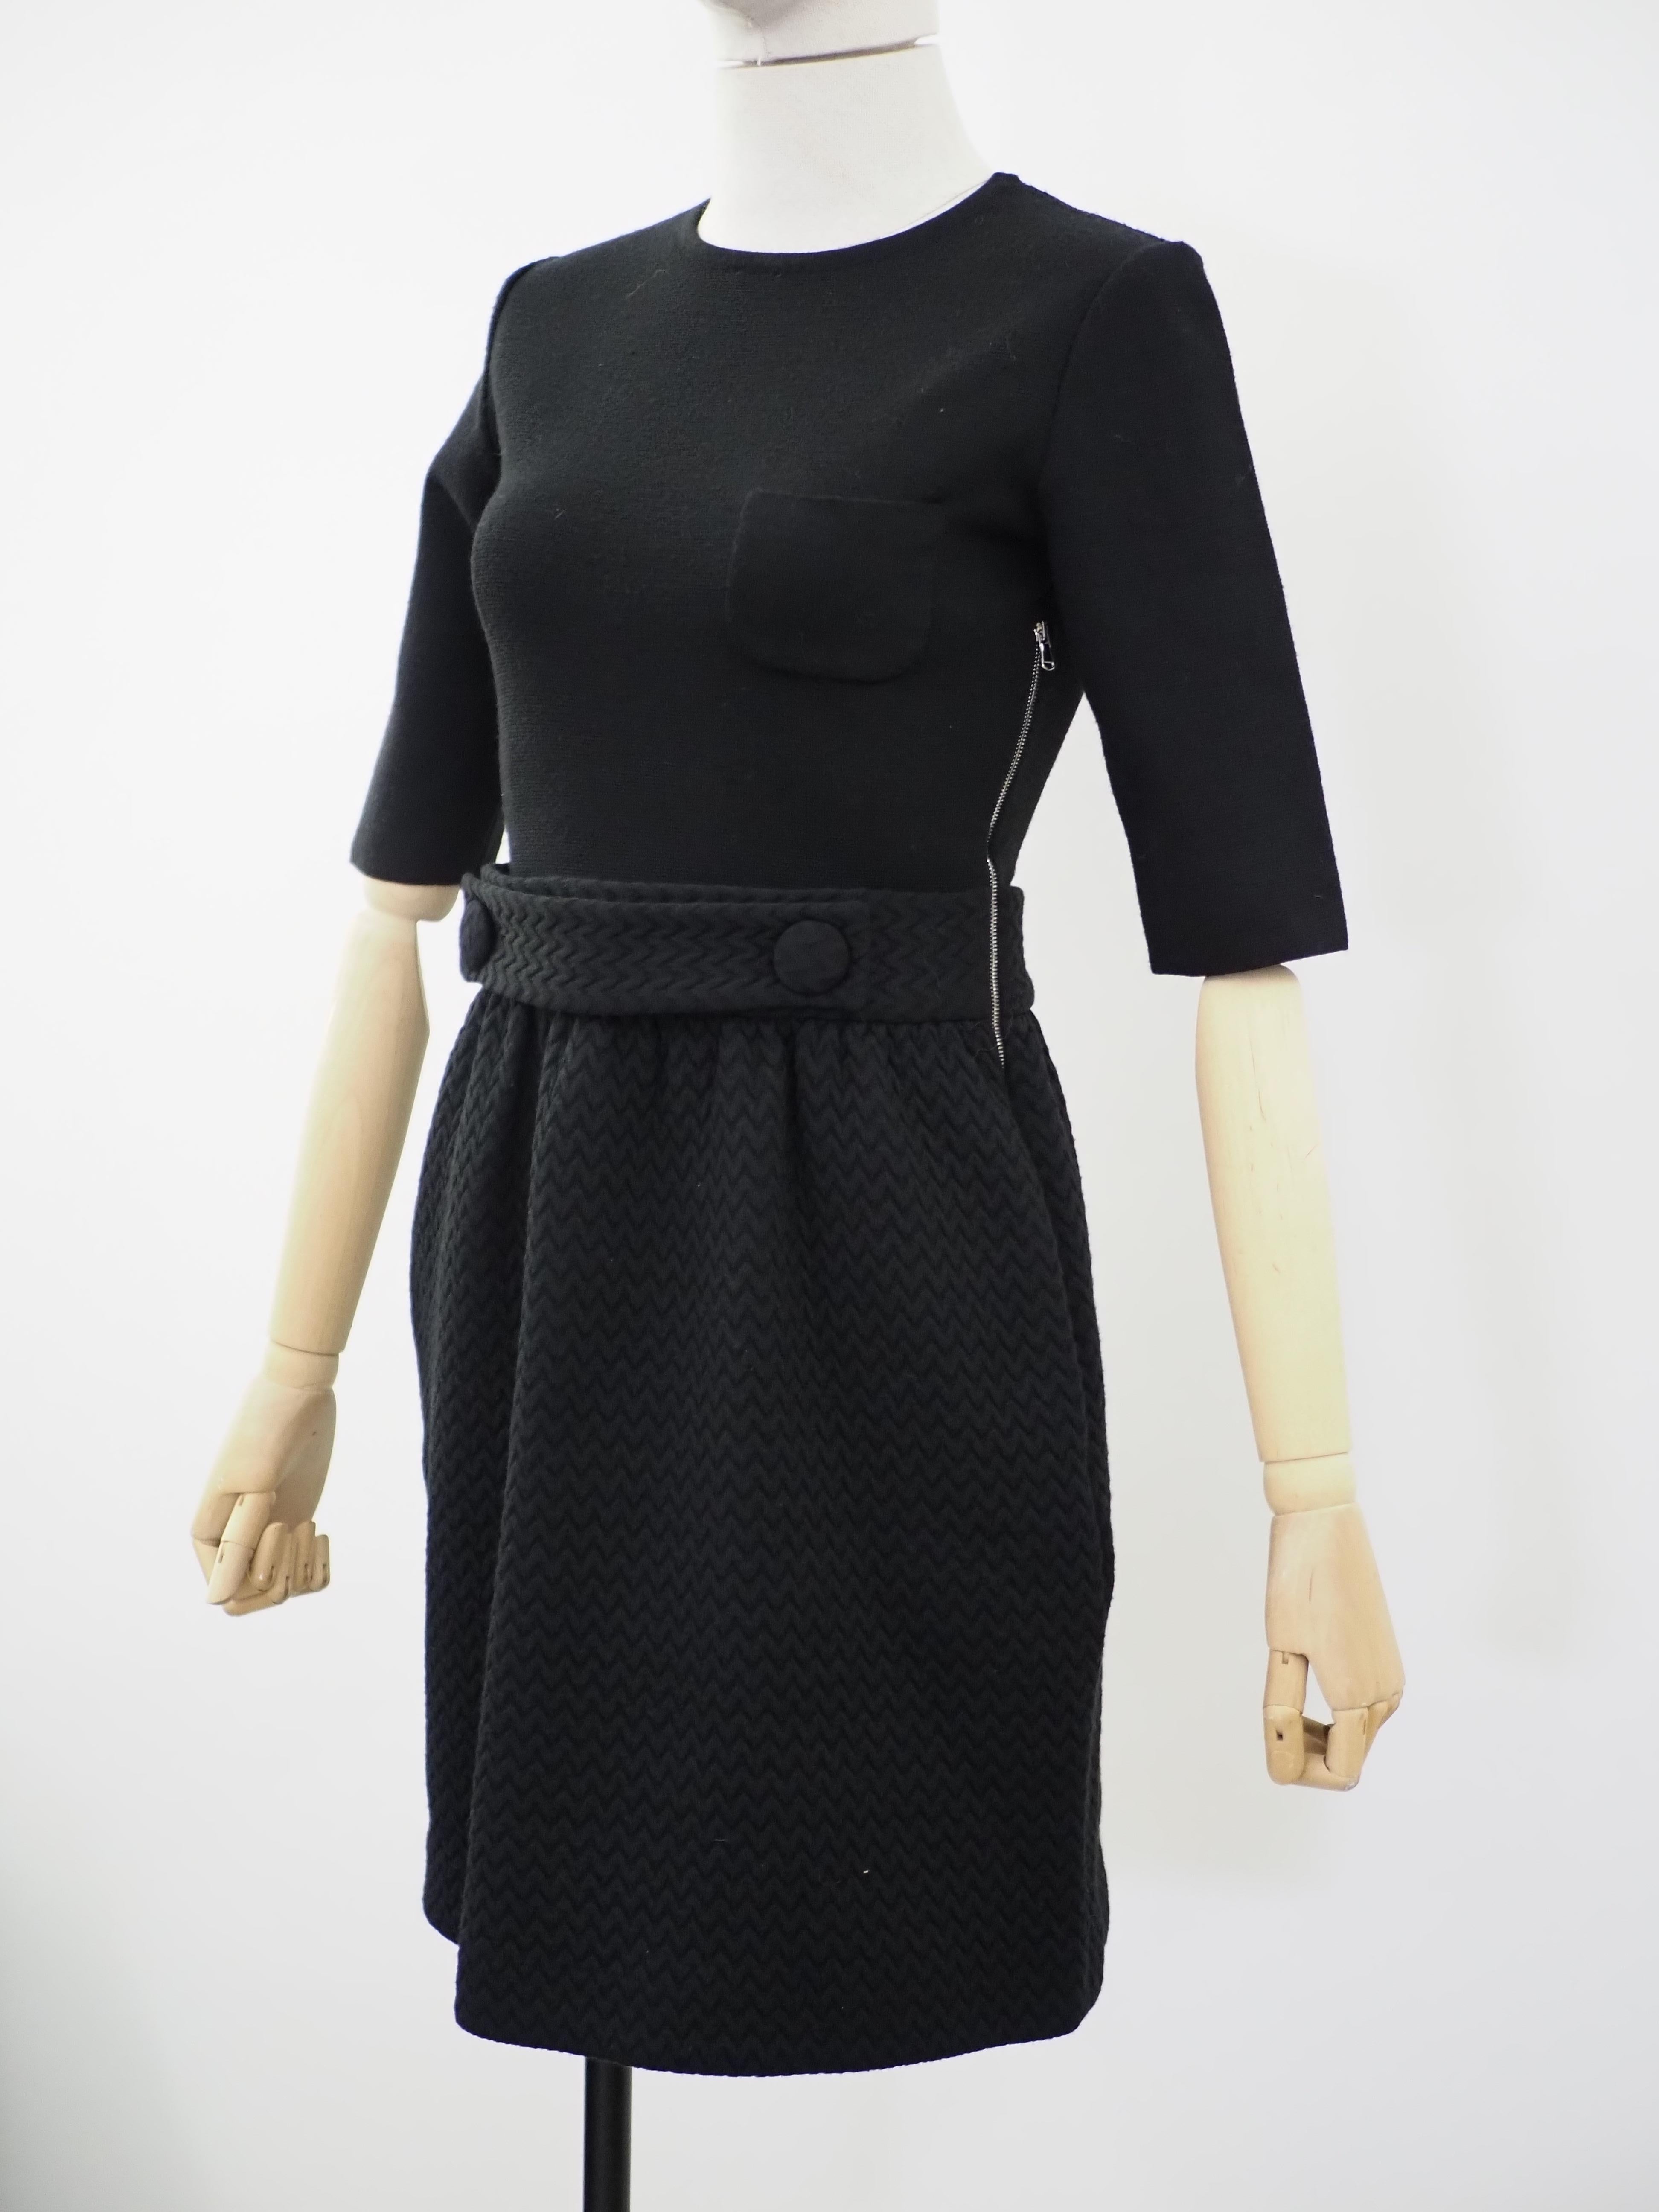 M Missoni black dress In Excellent Condition For Sale In Capri, IT